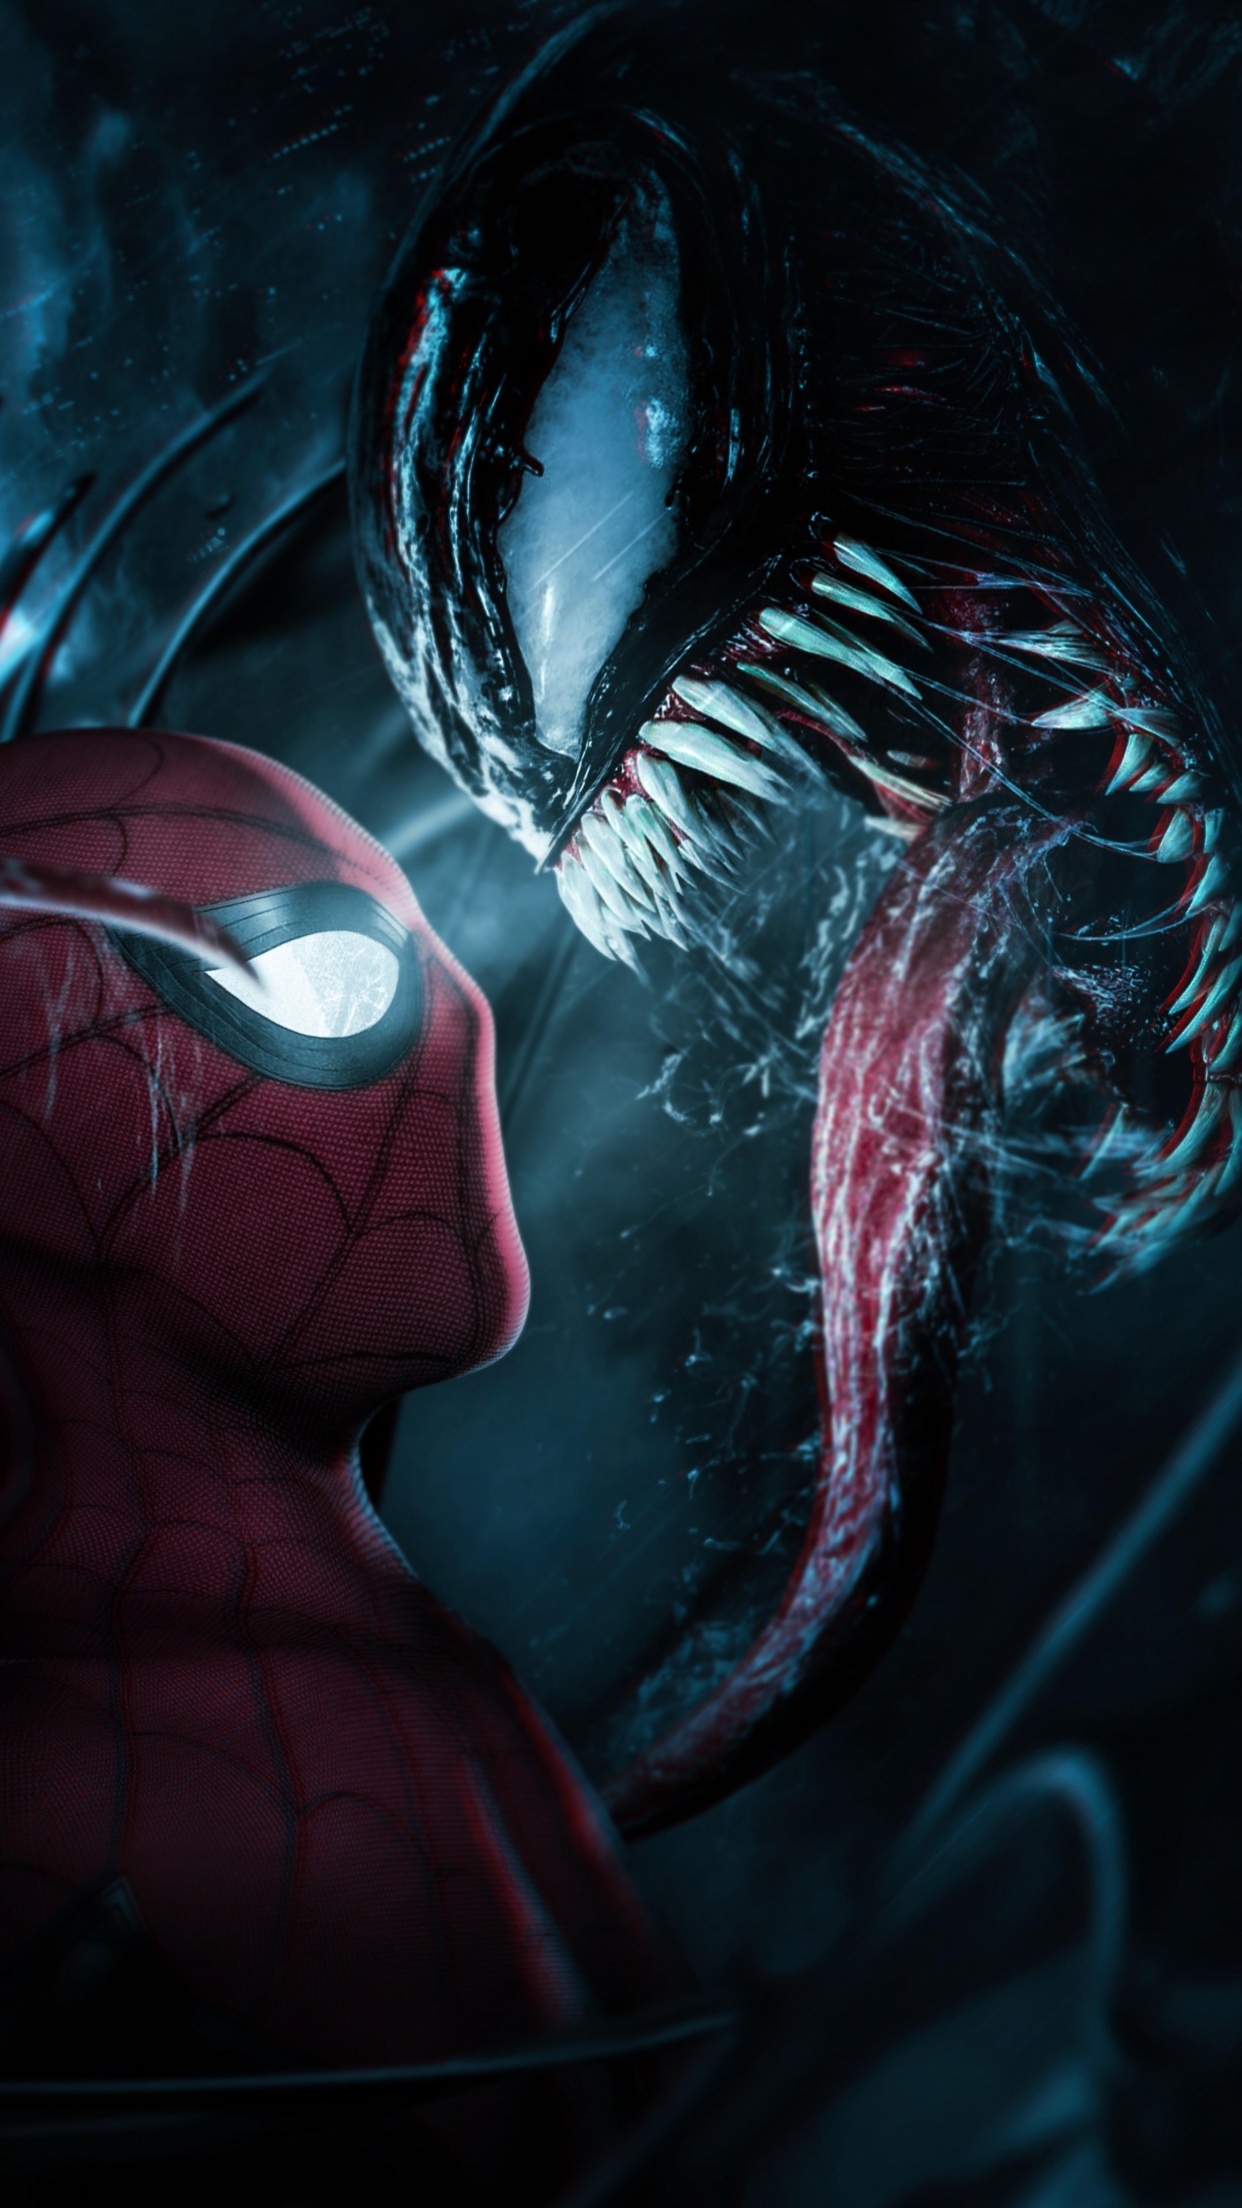 Spider-Man vs Venom 4K Wallpaper for iPhone